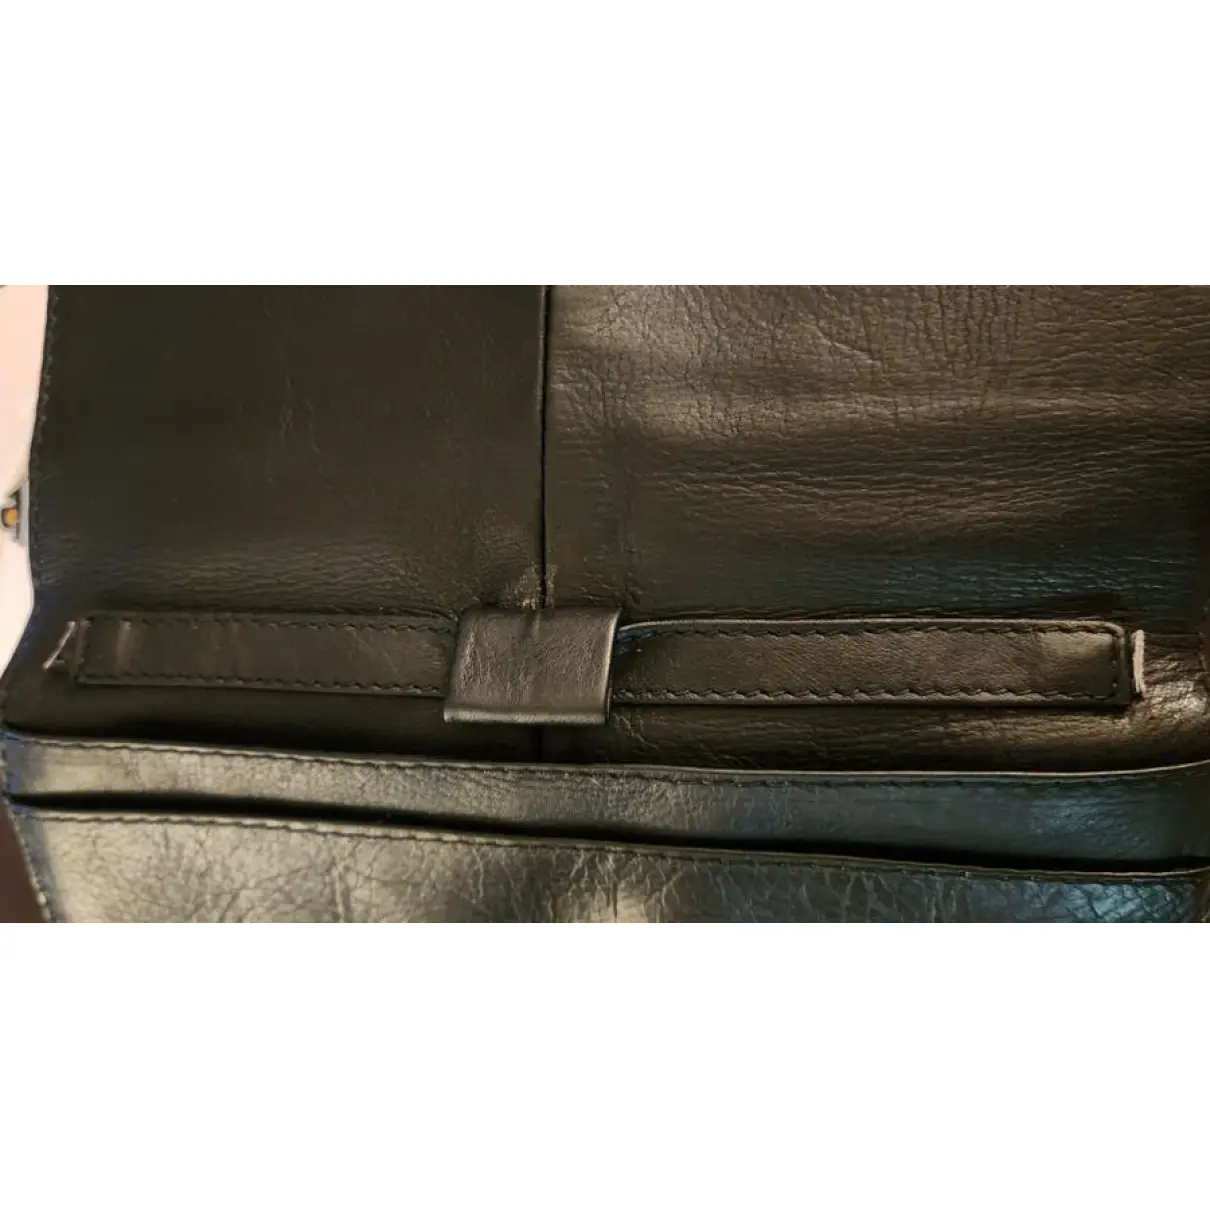 Leather handbag Hobo International